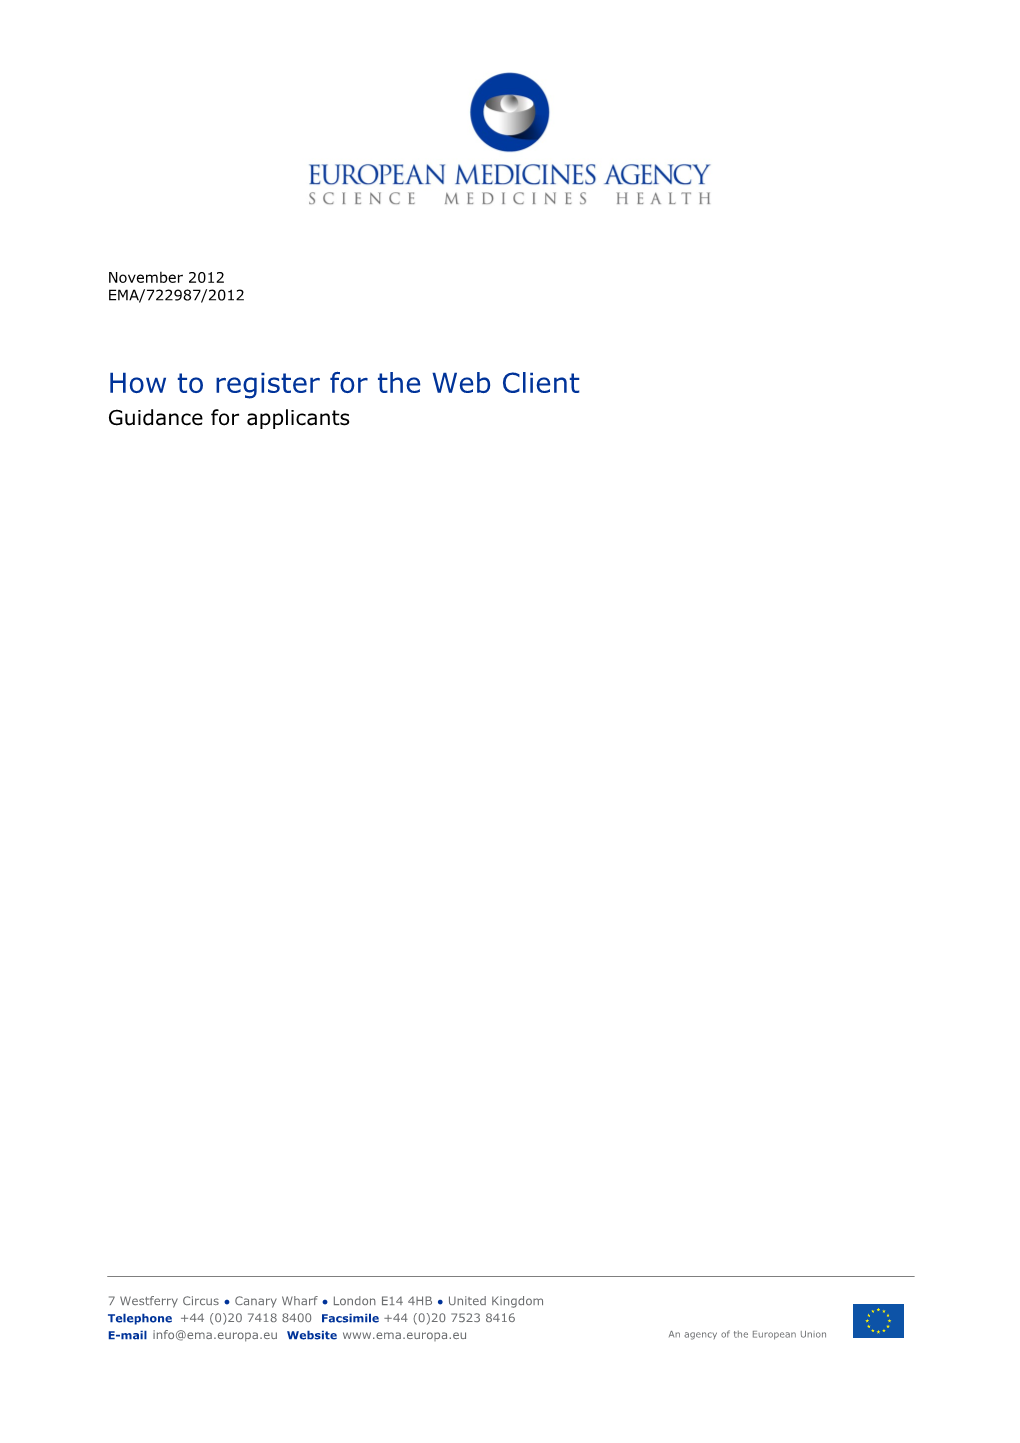 Web Client Online Registration User Guidance - PRODUCTION